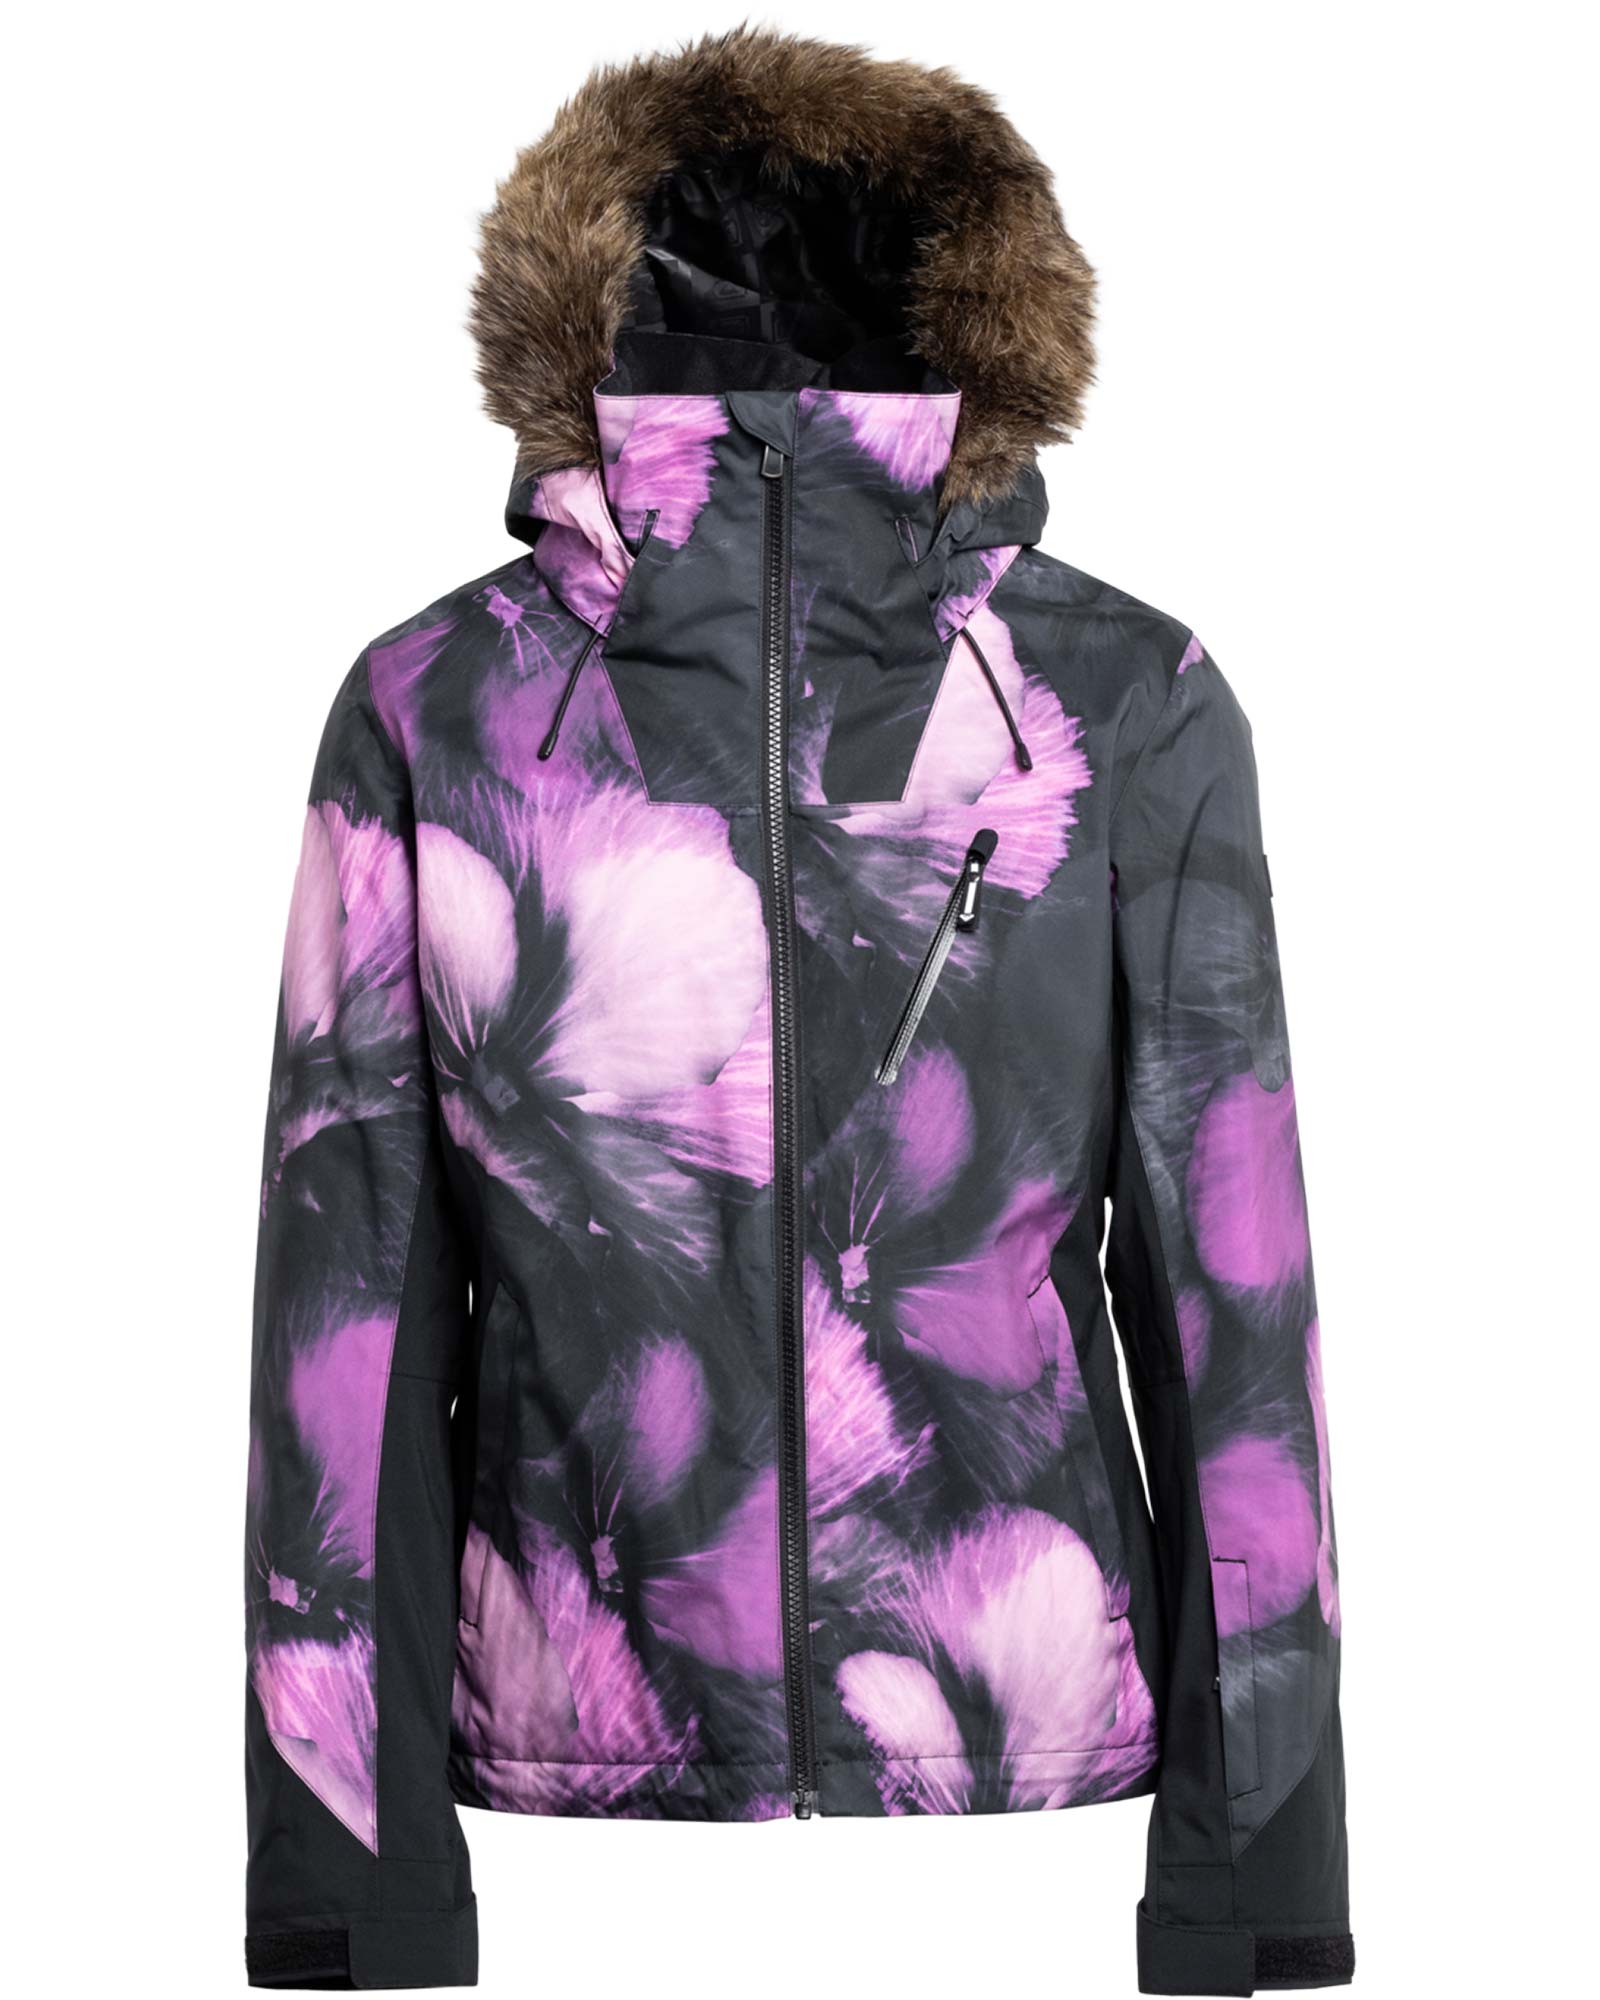 Roxy Jet Ski Premium Women’s Jacket - True Black Pansy Print XL